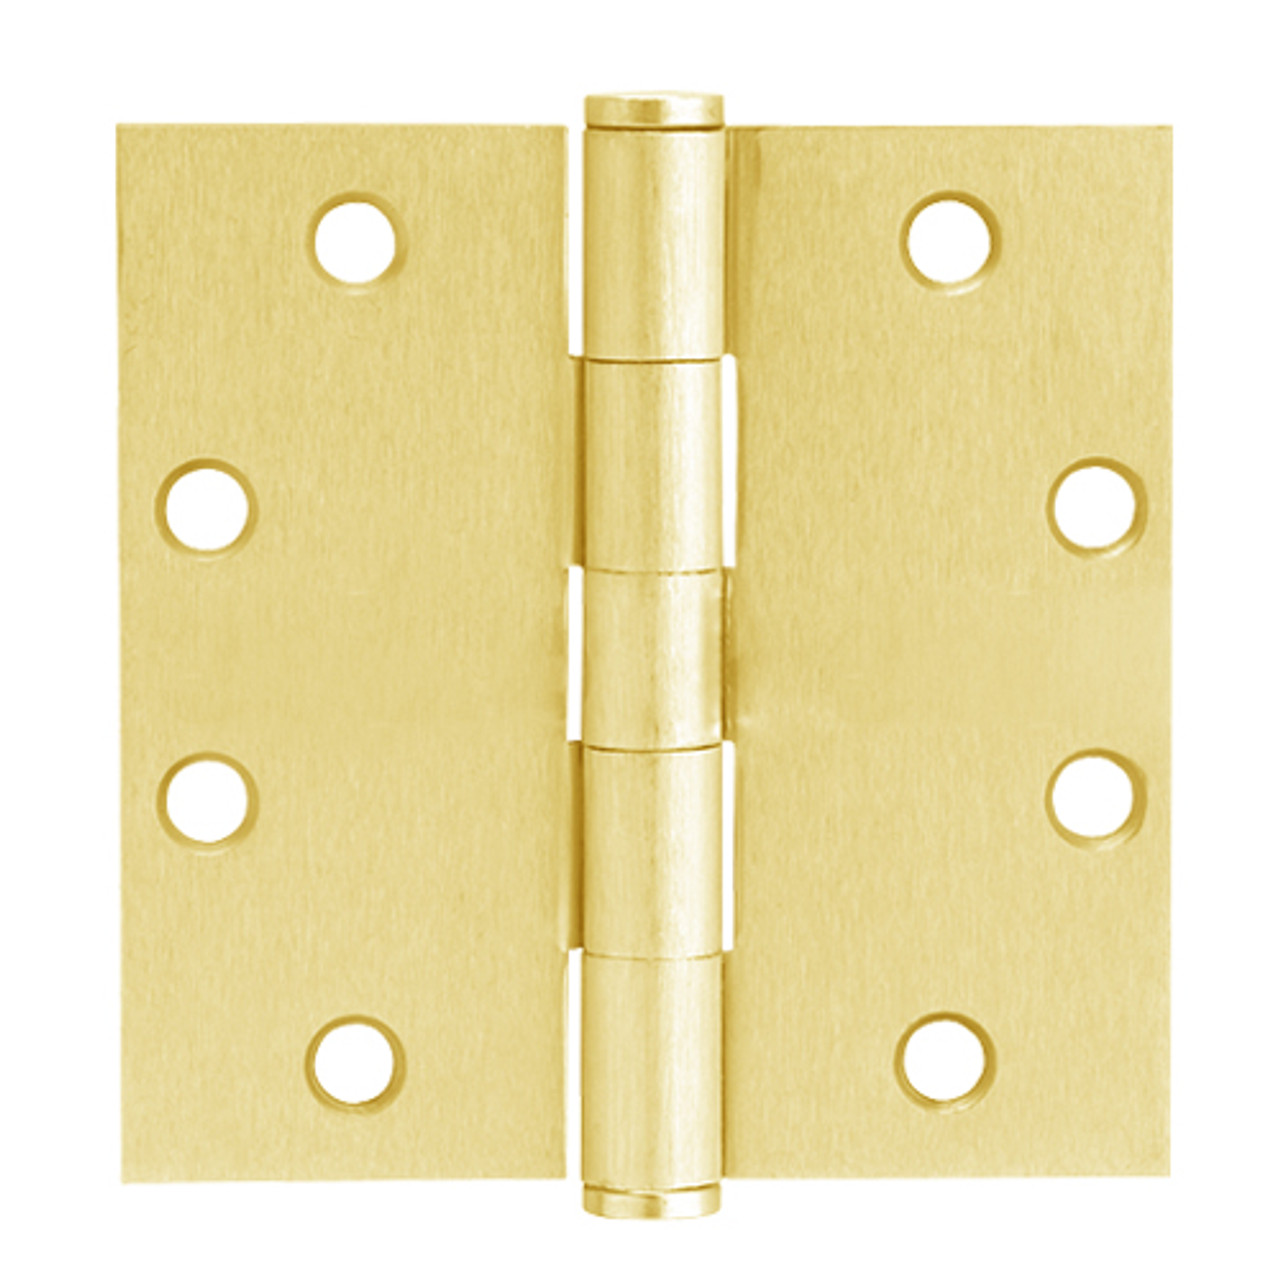 5PB1-5x4-5-605 IVES 5 Knuckle Plain Bearing Full Mortise Hinge in Bright Brass